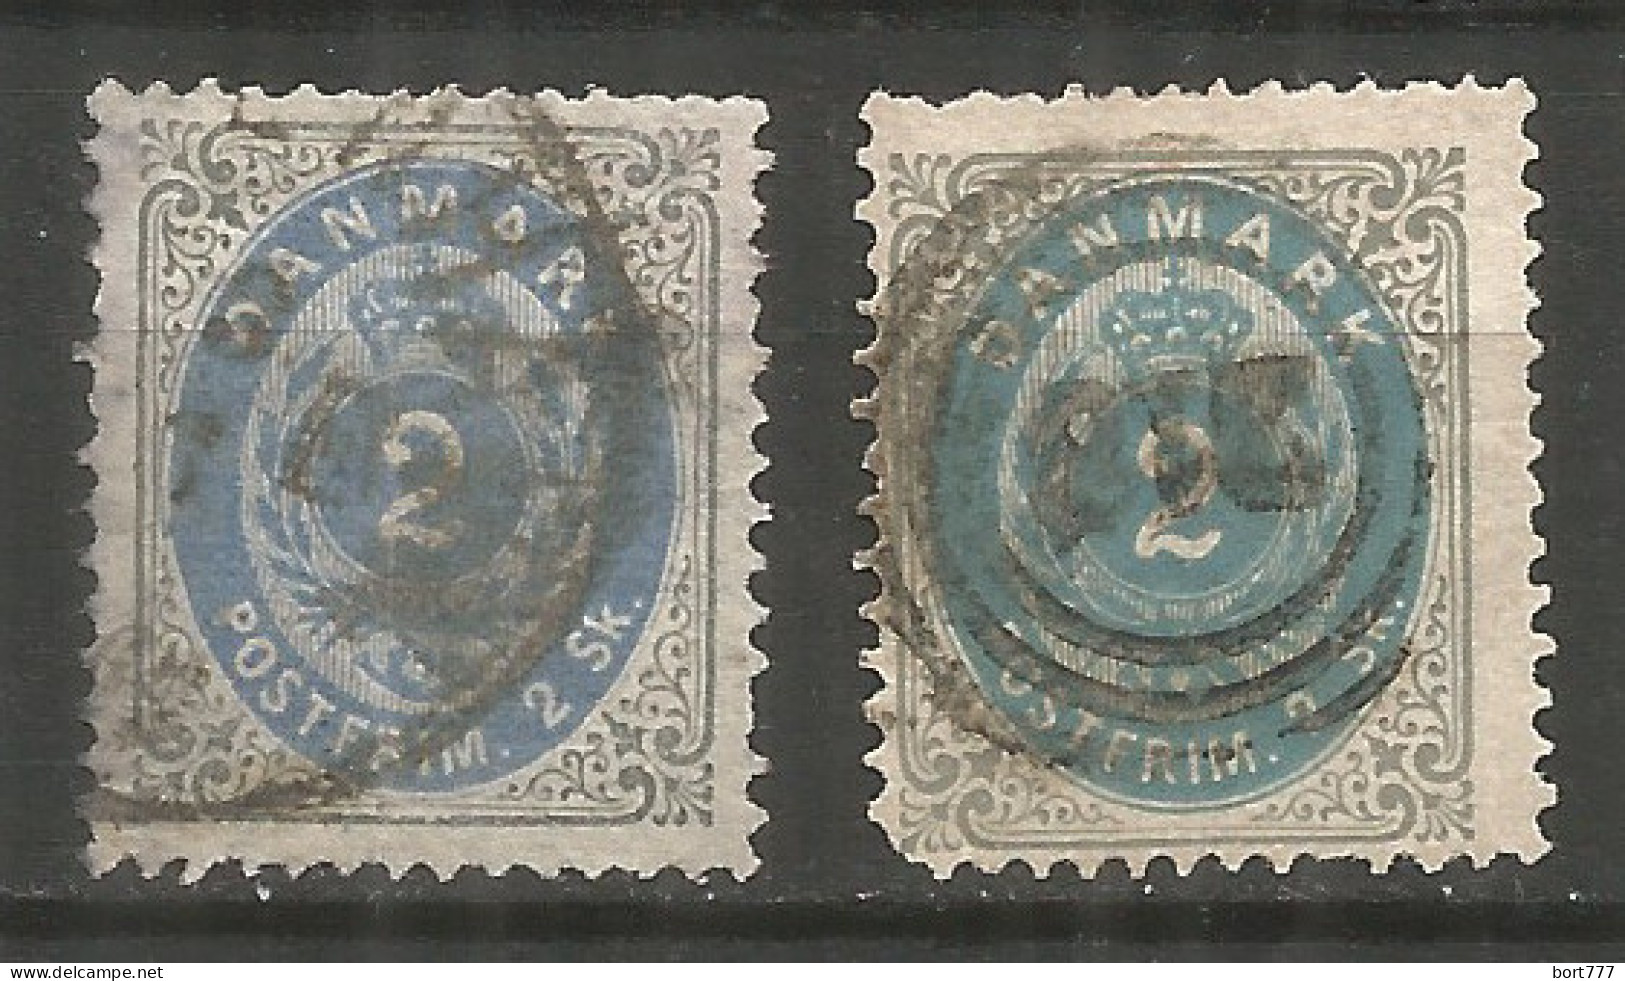 Denmark 1870 Year Used Stamps Mi. 16 I, II - Usati